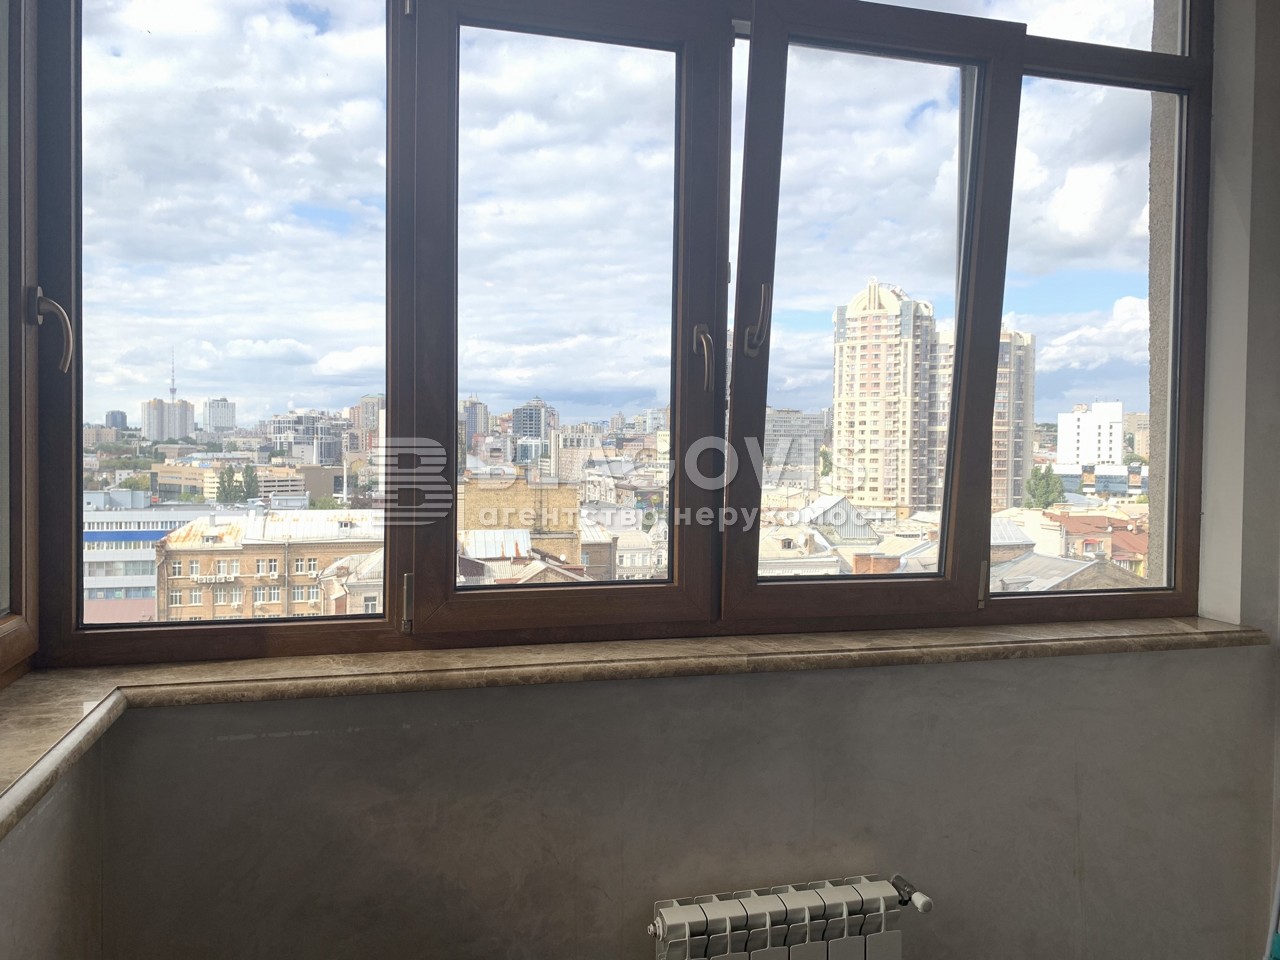 Квартира R-1415, Саксаганского, 121, Киев - Фото 18